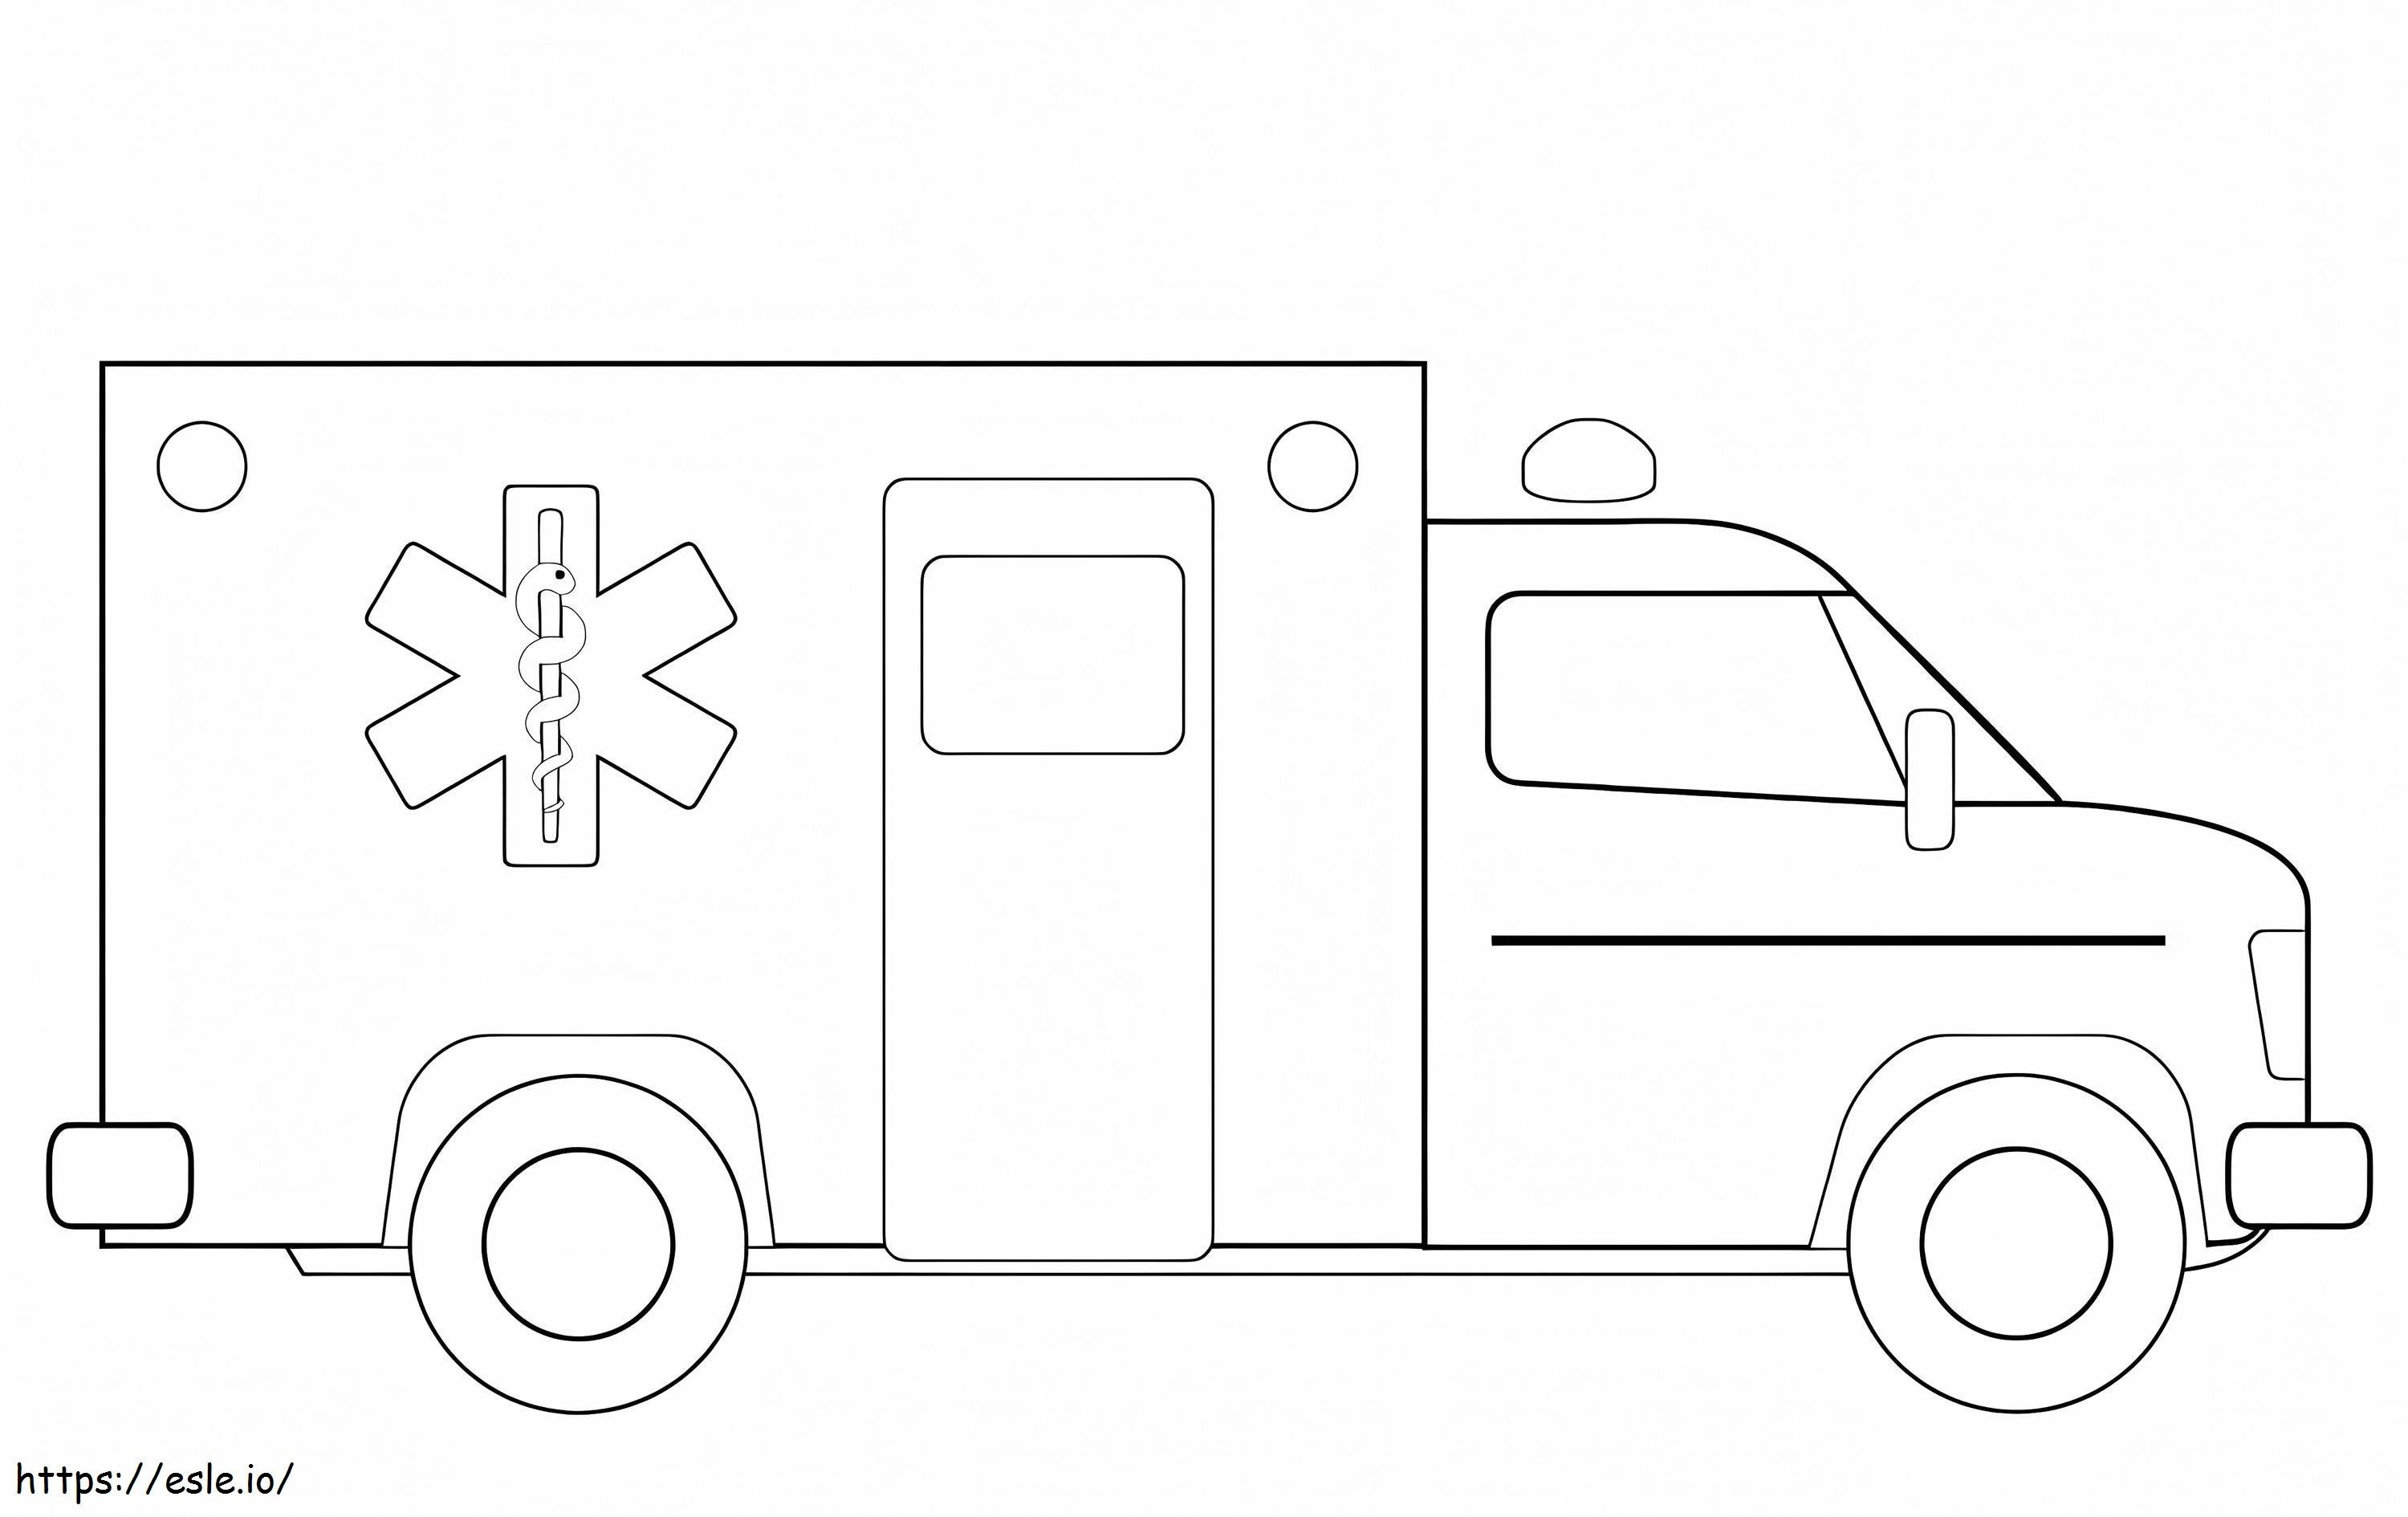 Ambulans 13 1024X645 kolorowanka